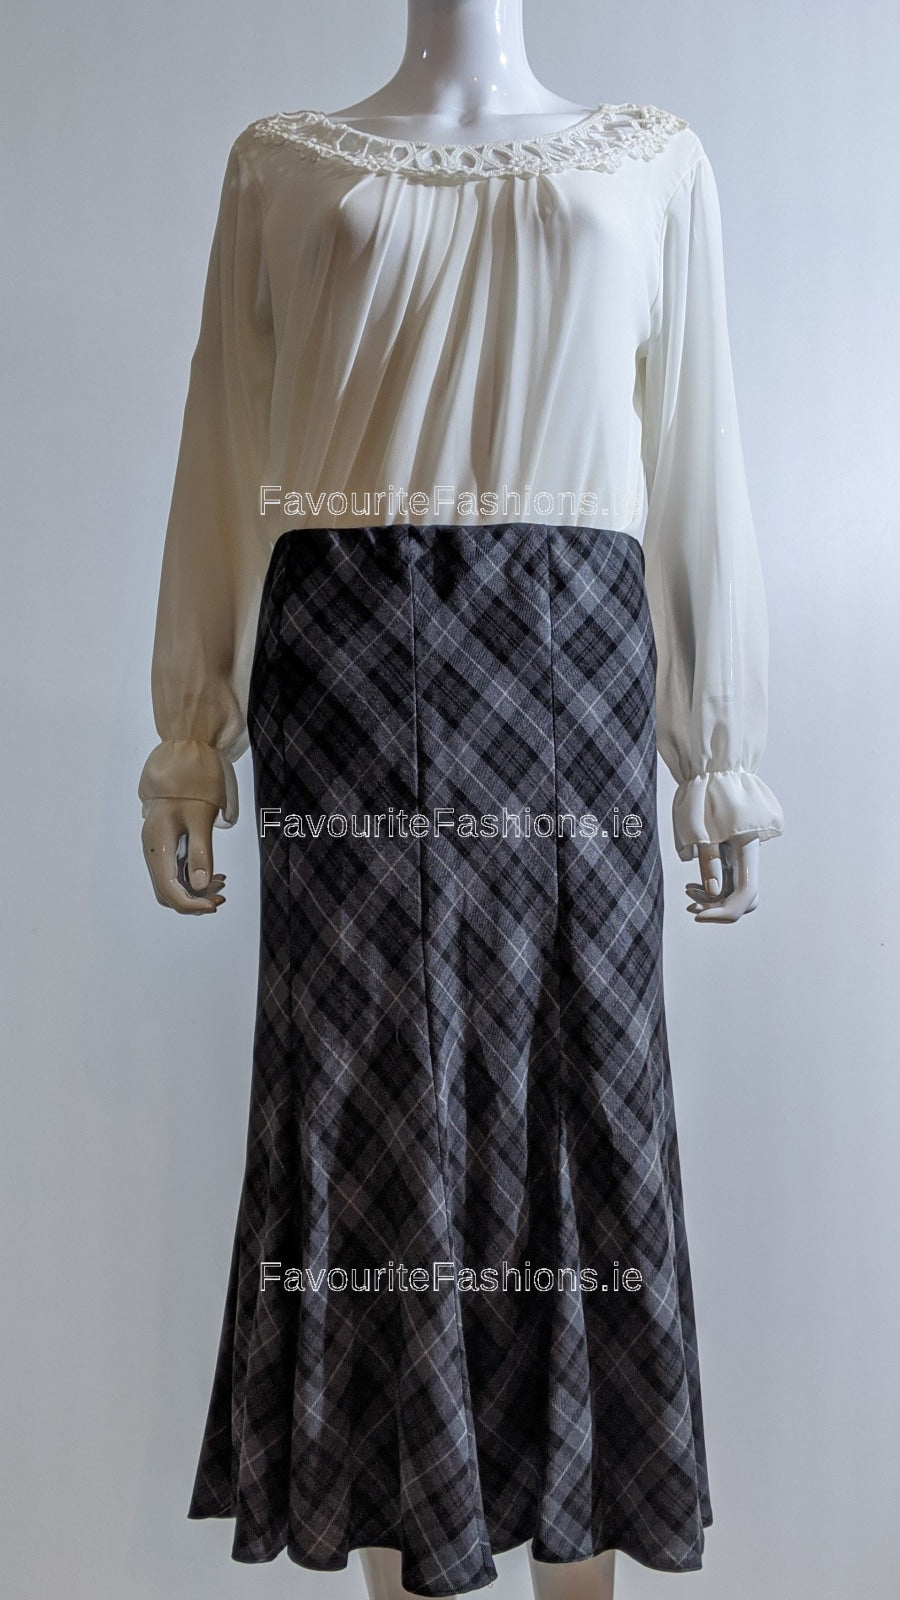 Grey & Black Elasticated Lined A-Line Checked Tartan Skirt